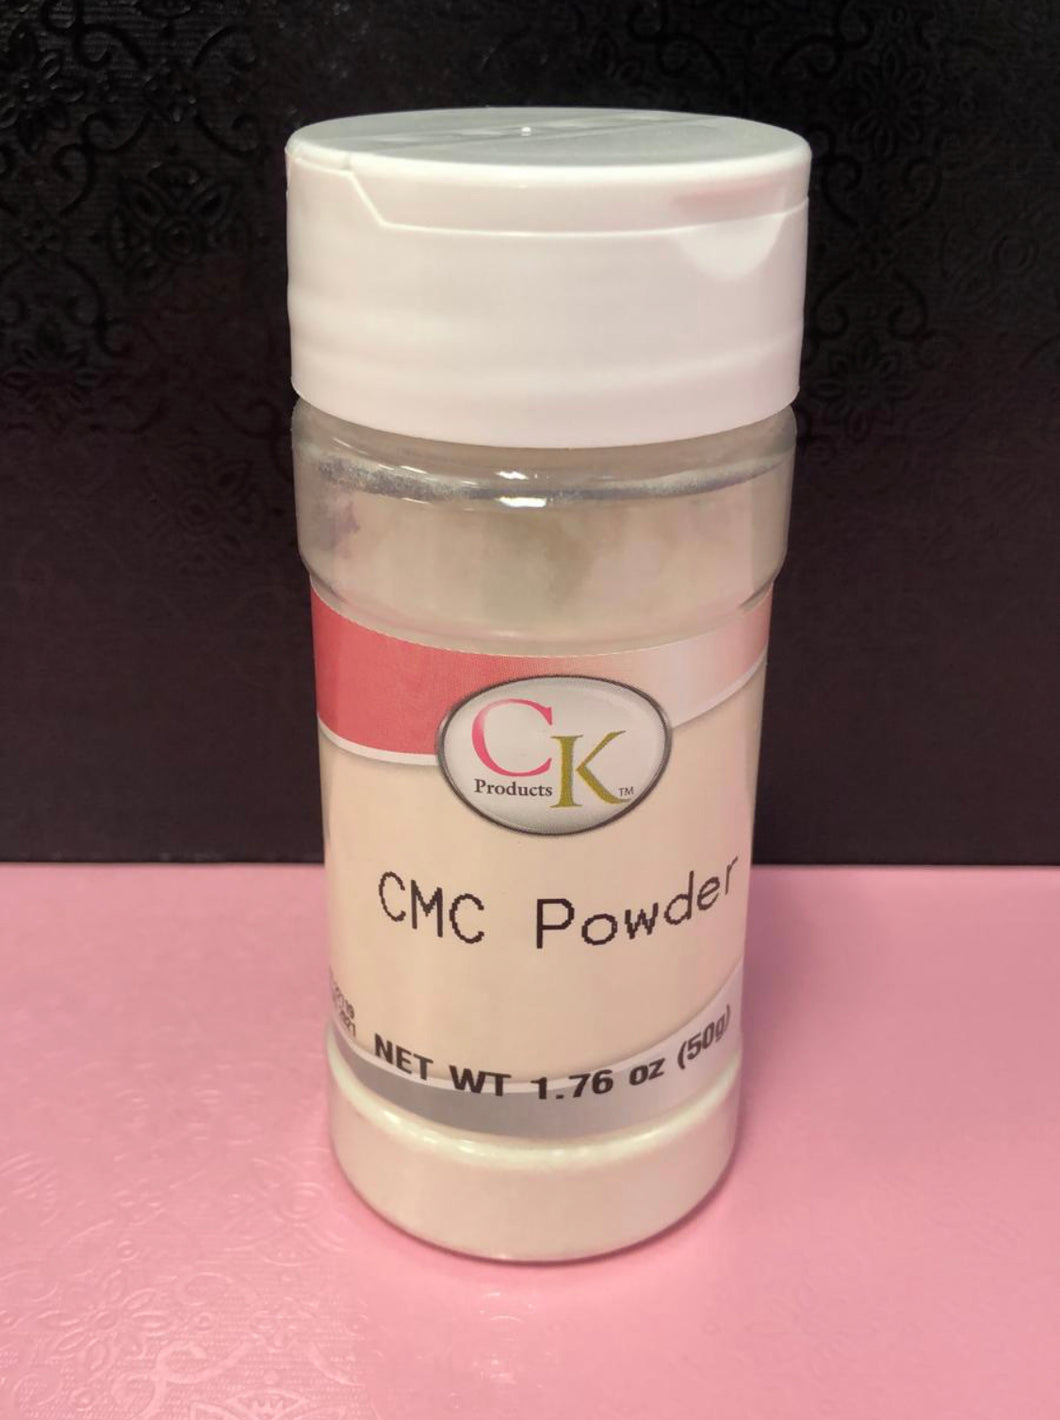 CMC Powder CK $2.99